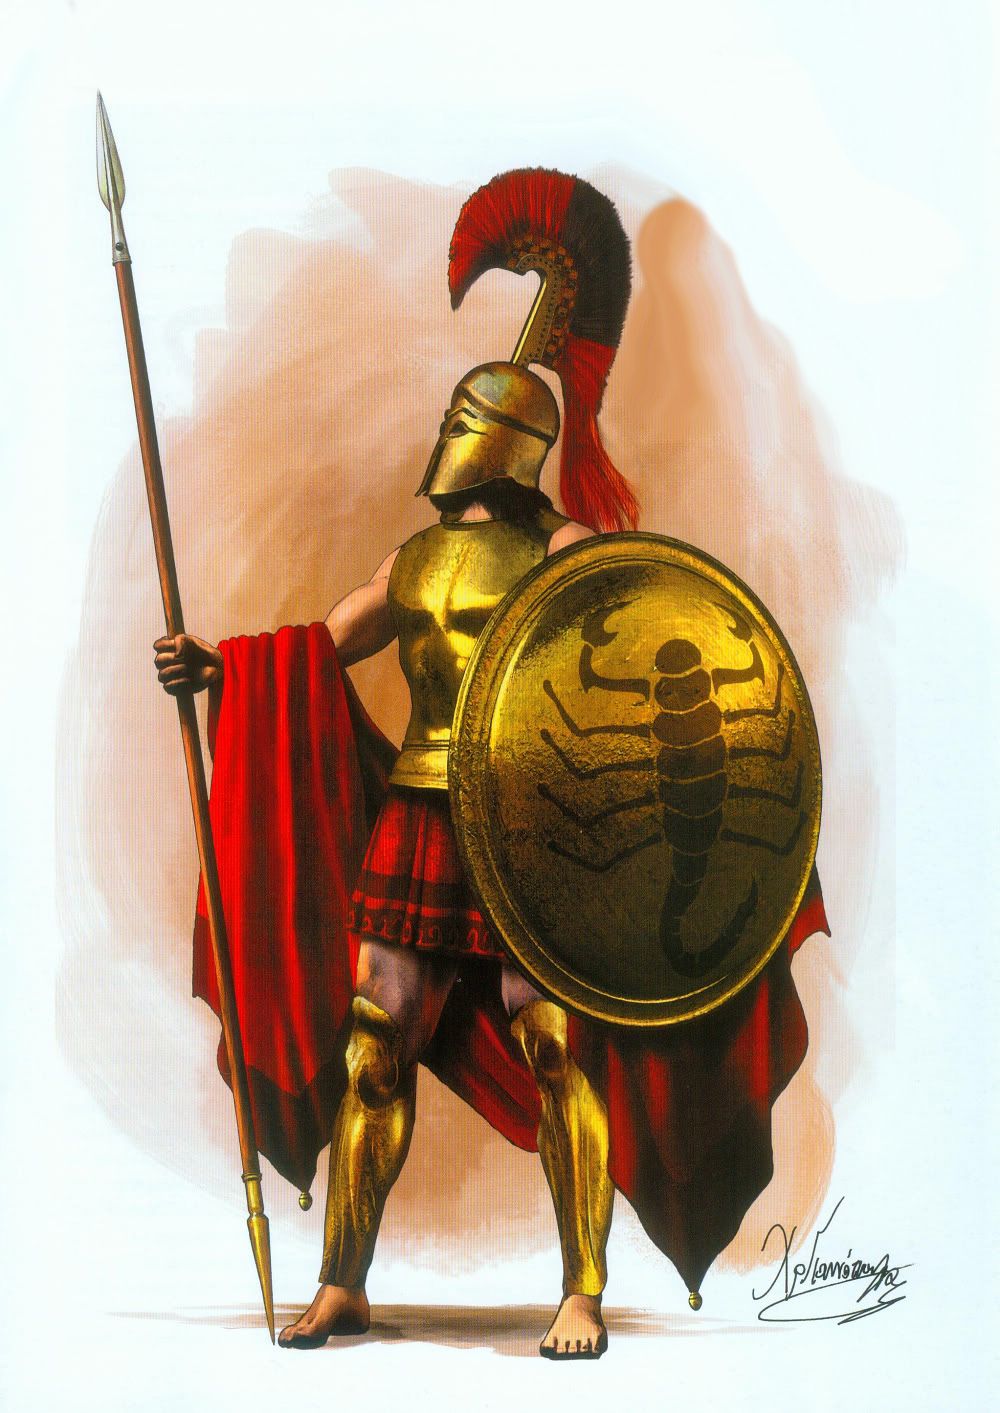 Lacedaemonian Hoplite by C. Giannopoulos | 그리스, 서양 및 군대 [고대 그리스 전쟁 7편]  300 스파르탄의 신화, 테르모필레 전투